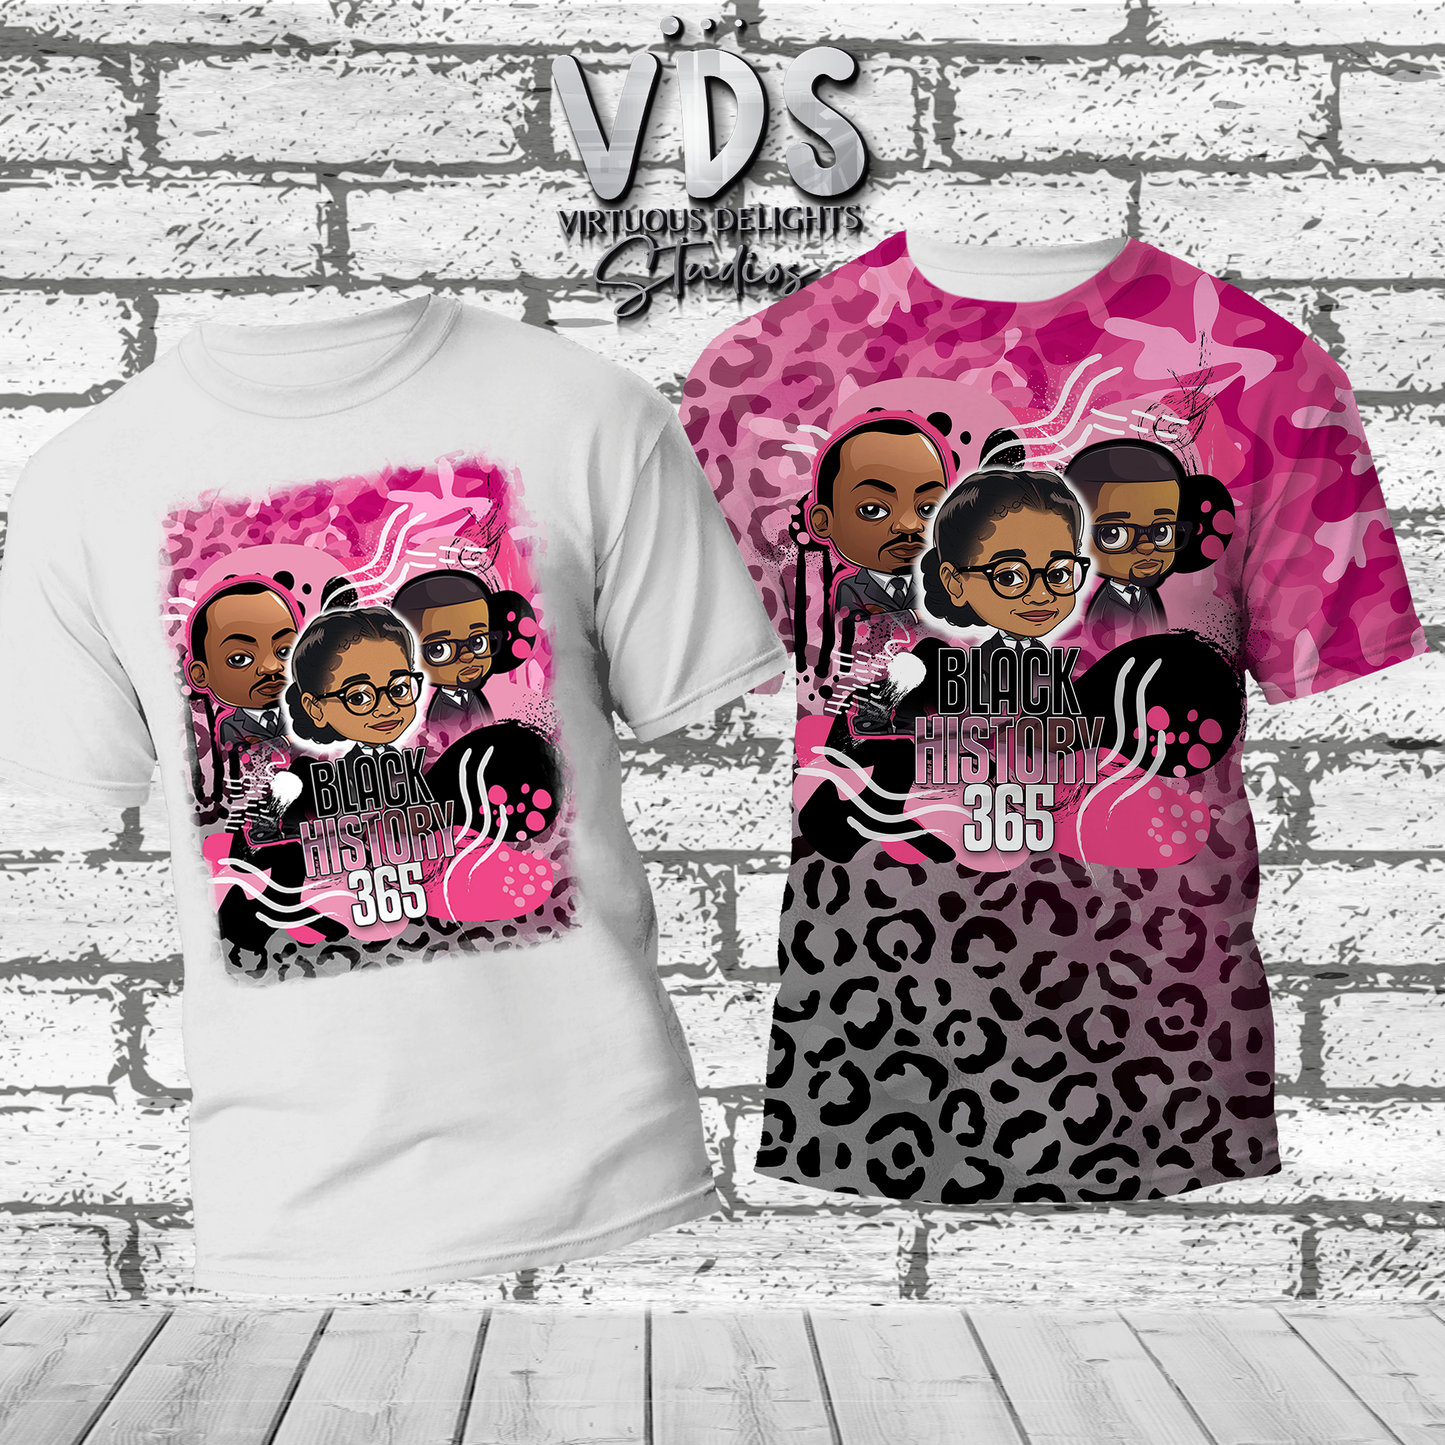 Black History 365 Cartoon Shirt-Pink & Black